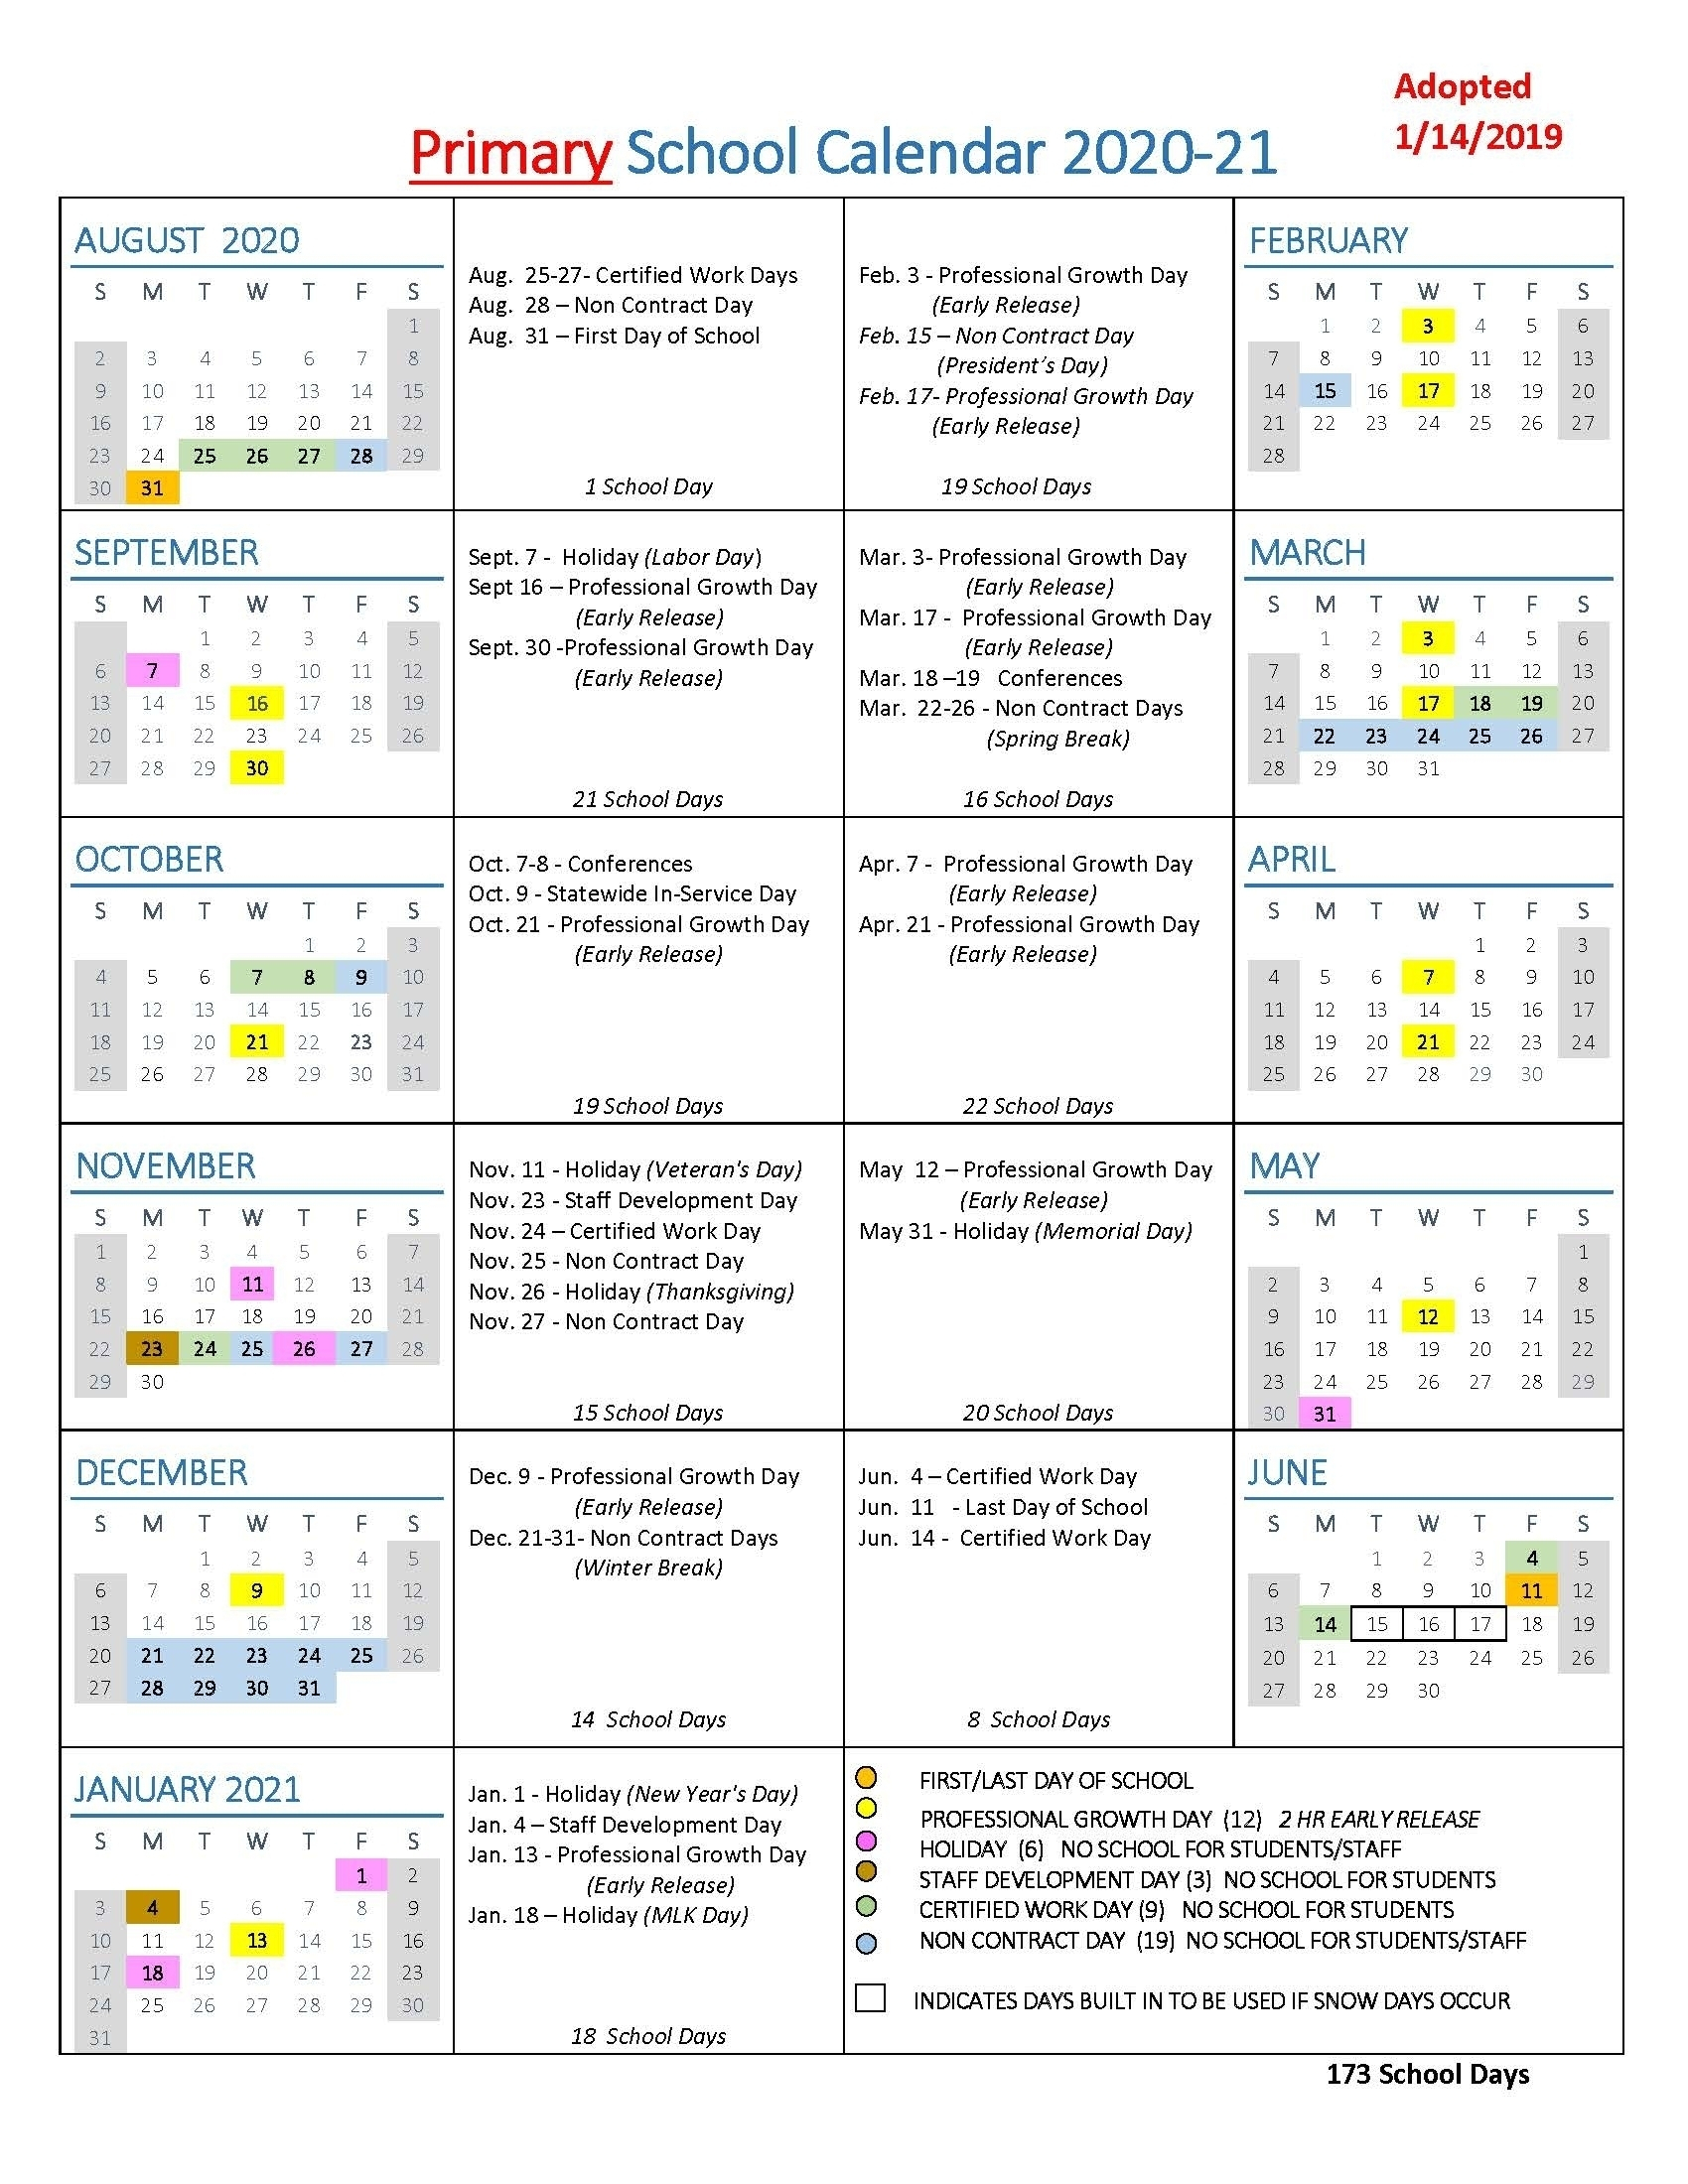 2020 4-4-5 Fiscal Accouting Calendar - Calendar